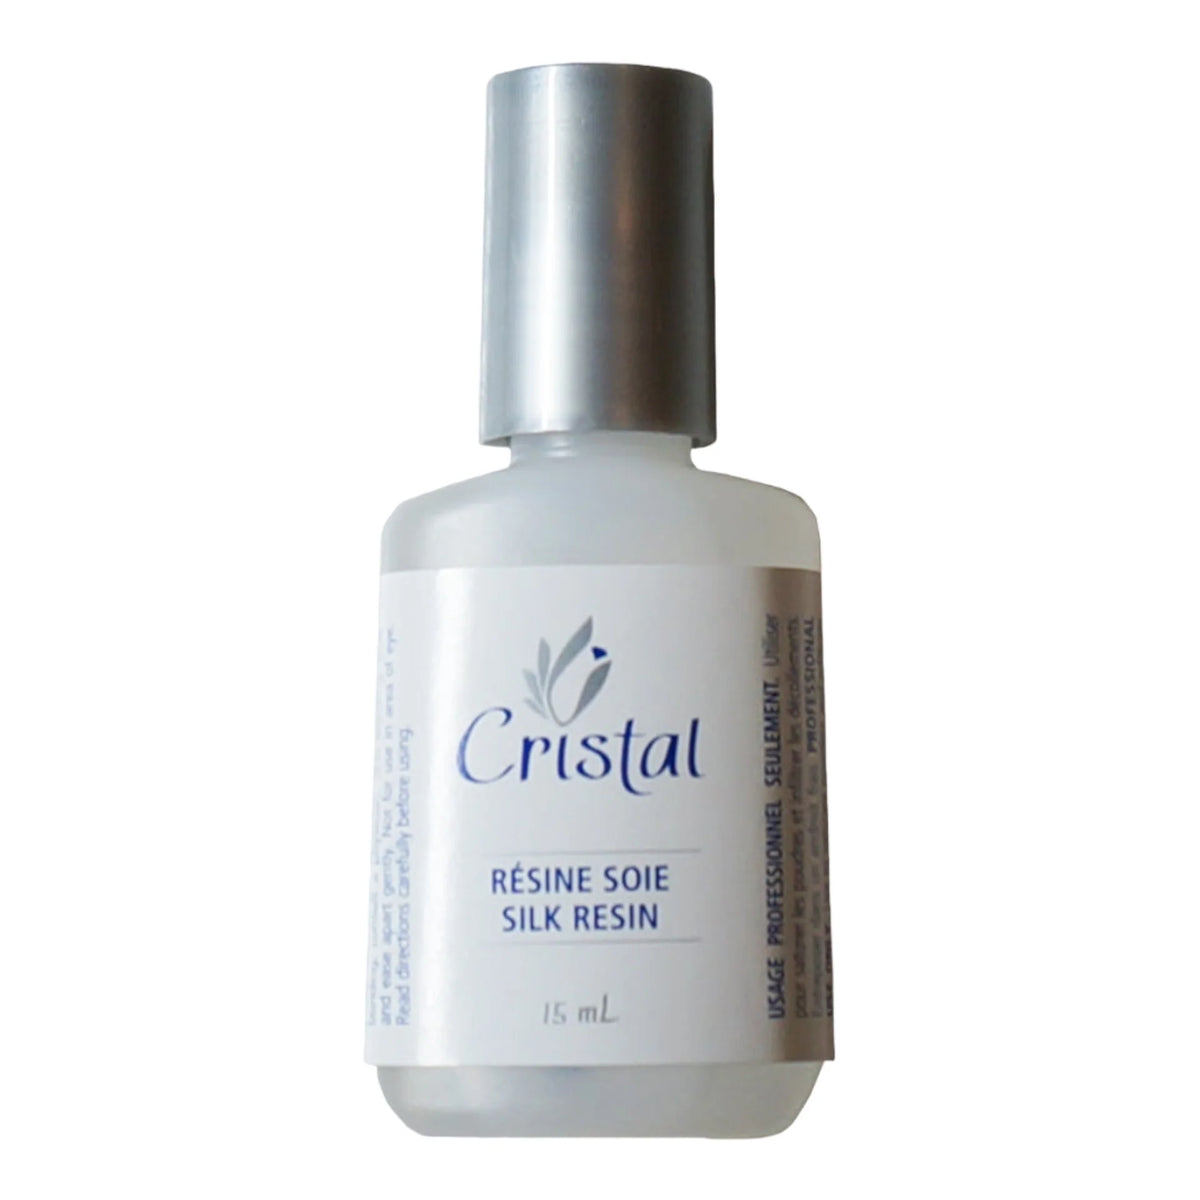 Cristal-Silk Resin